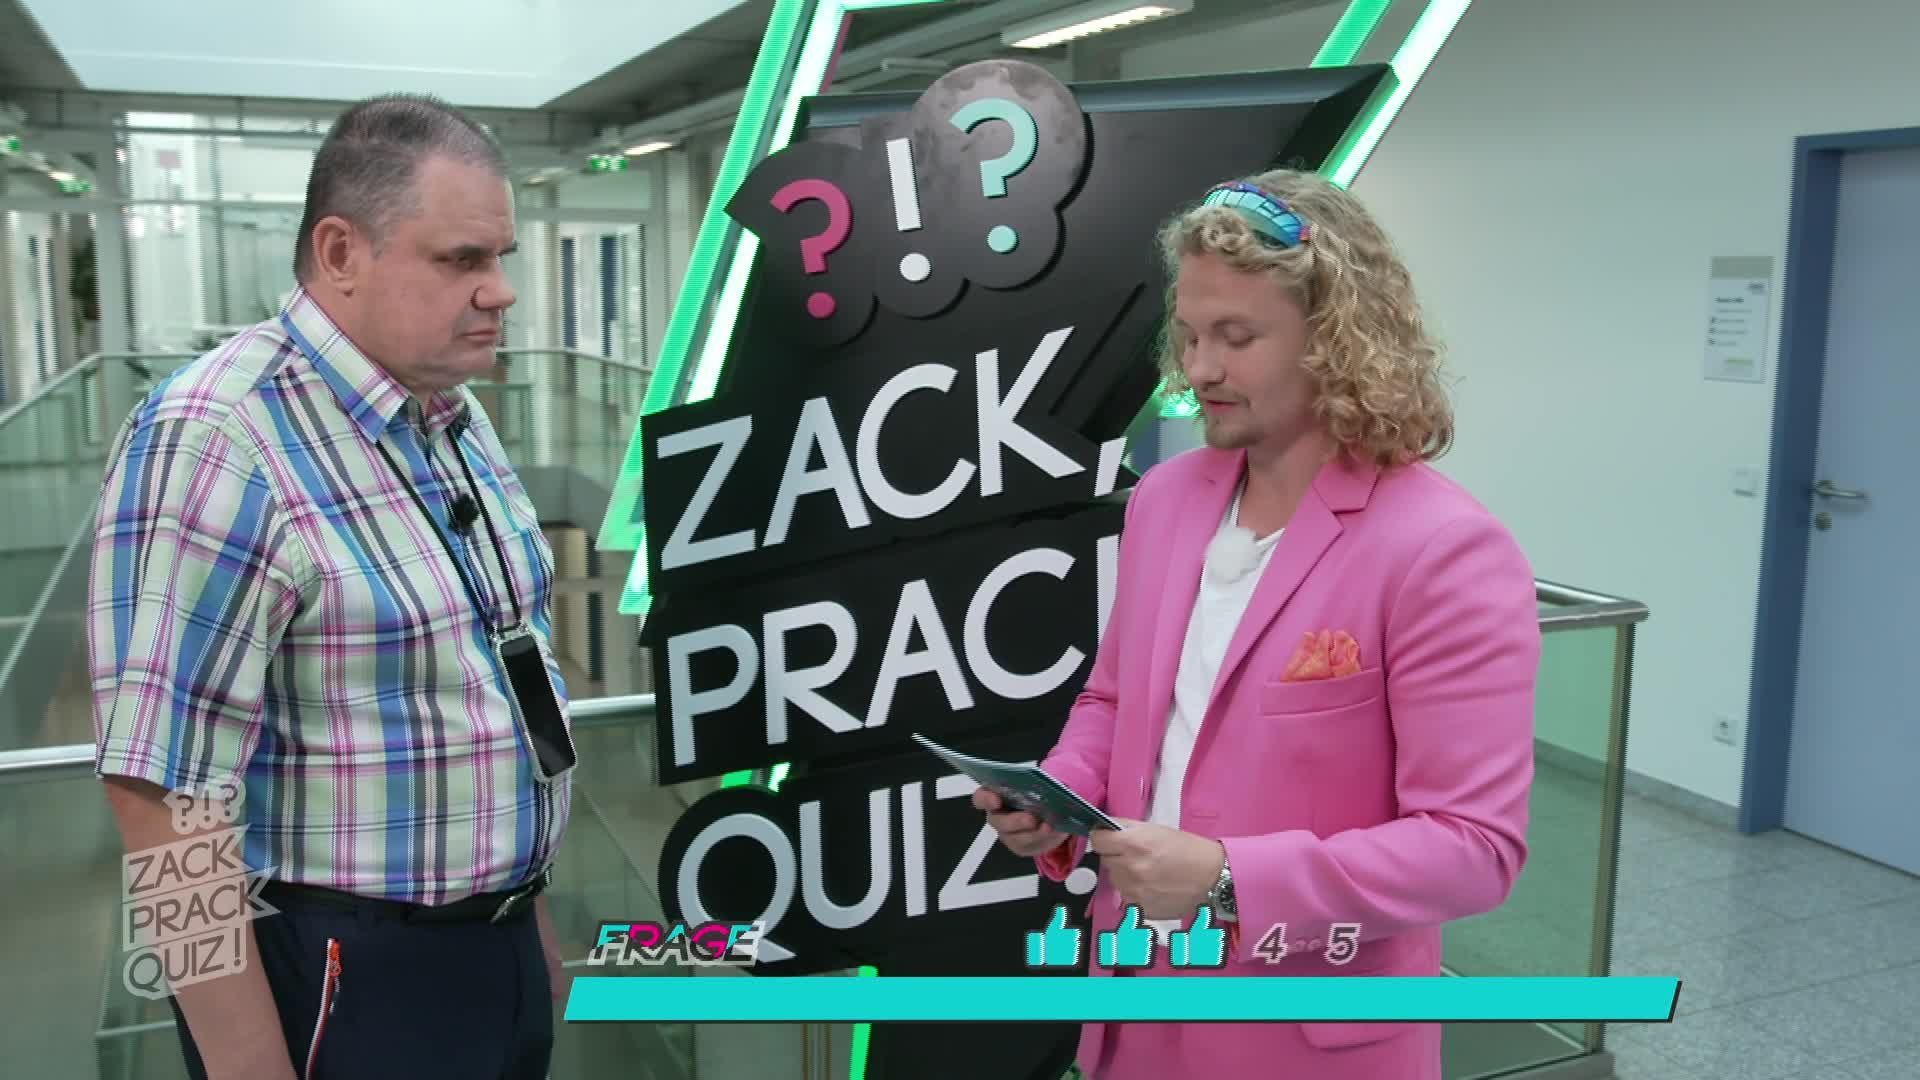 Zack, Prack, Quiz - Staffel 1 Folge 7